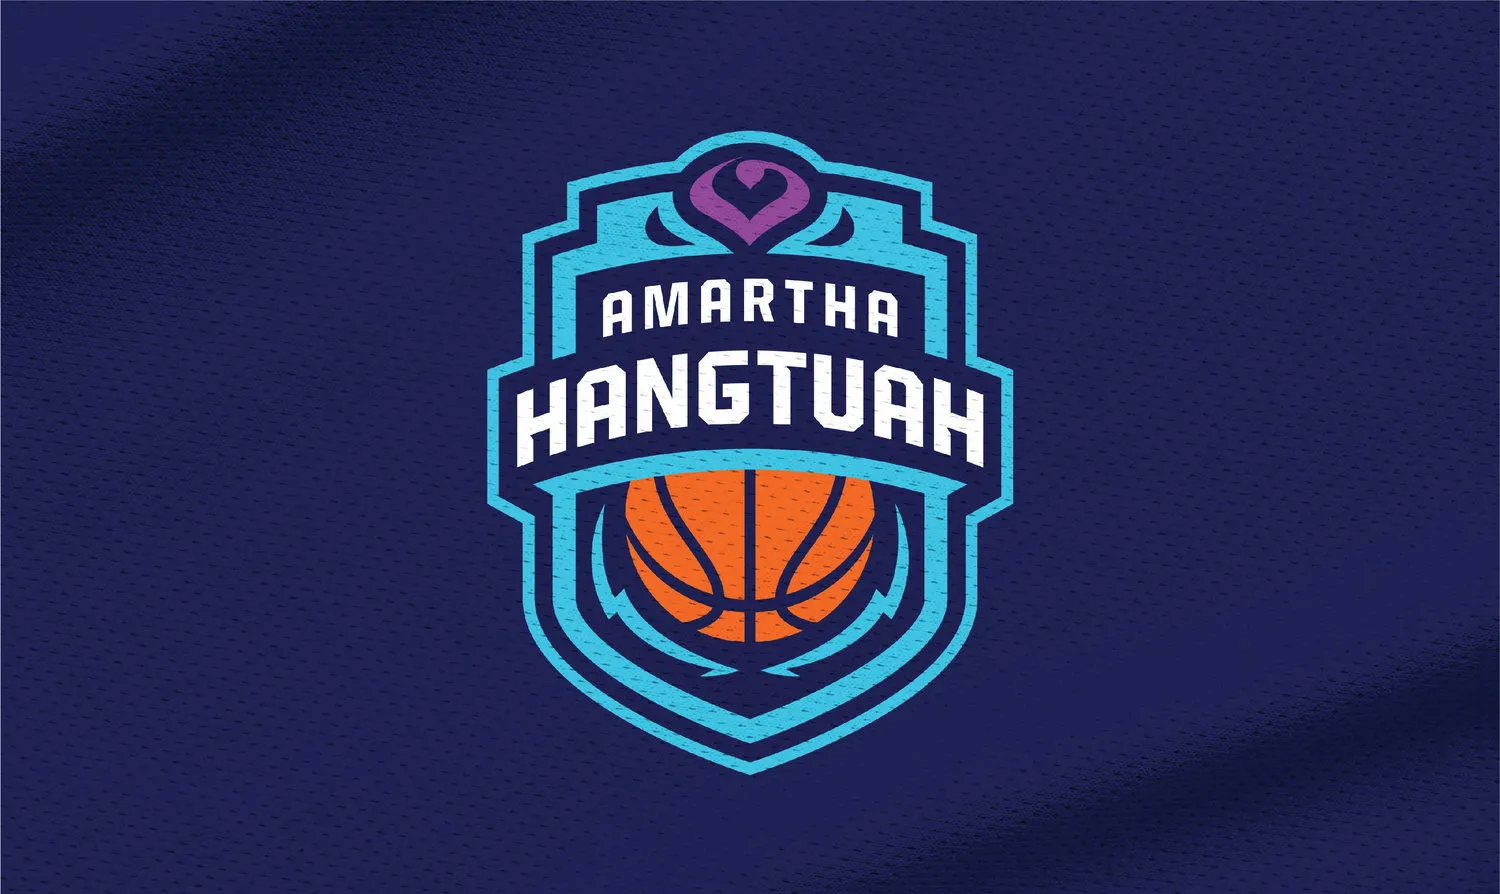 Amartha Hangtuah Jakarta